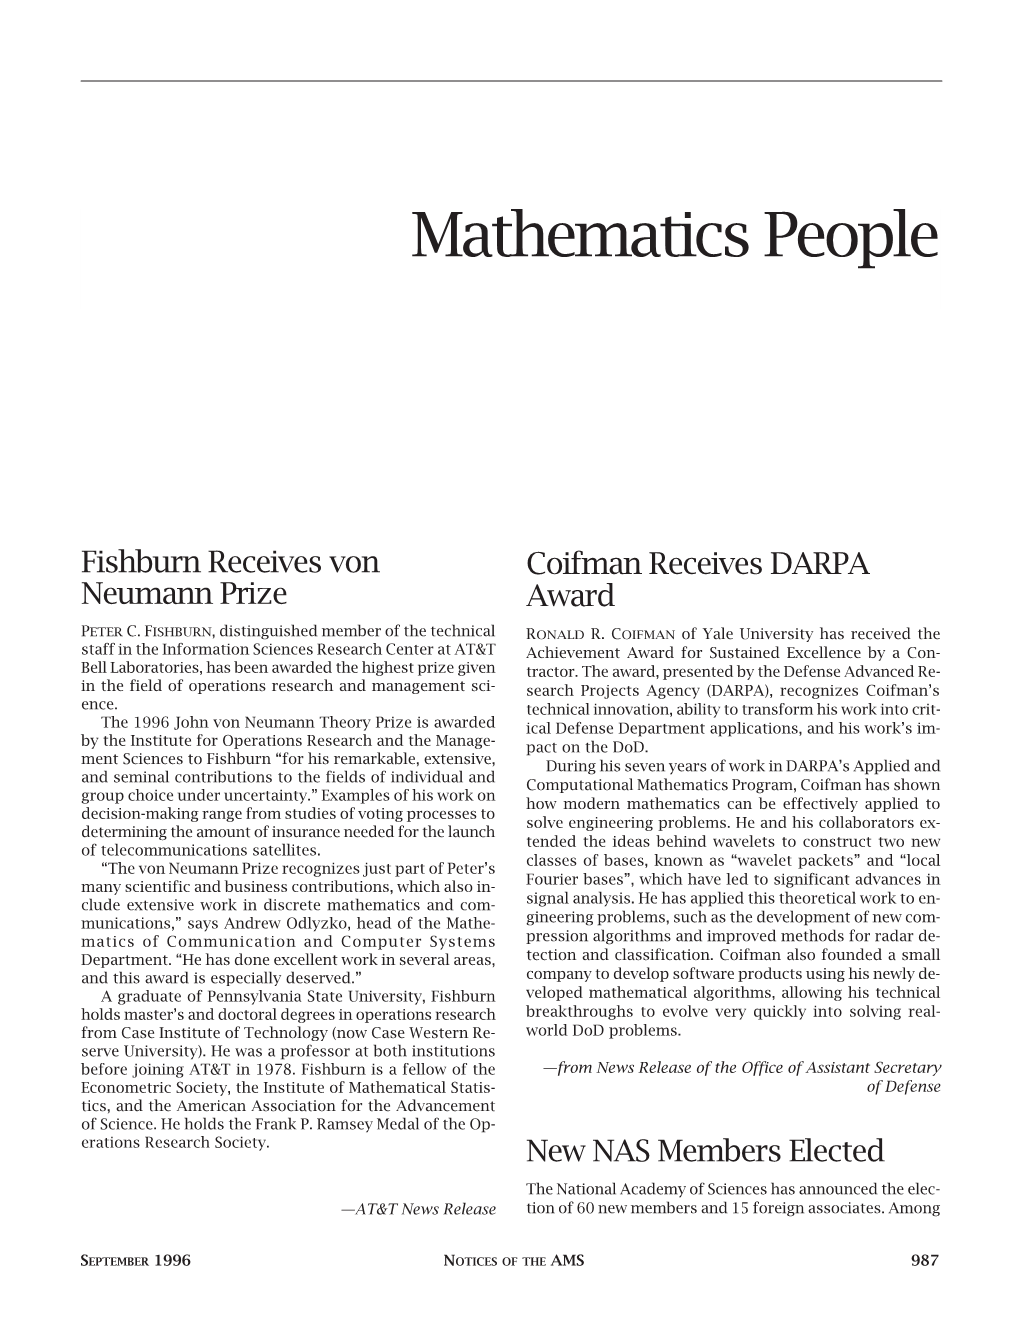 Mathematics People, Volume 43, Number 9